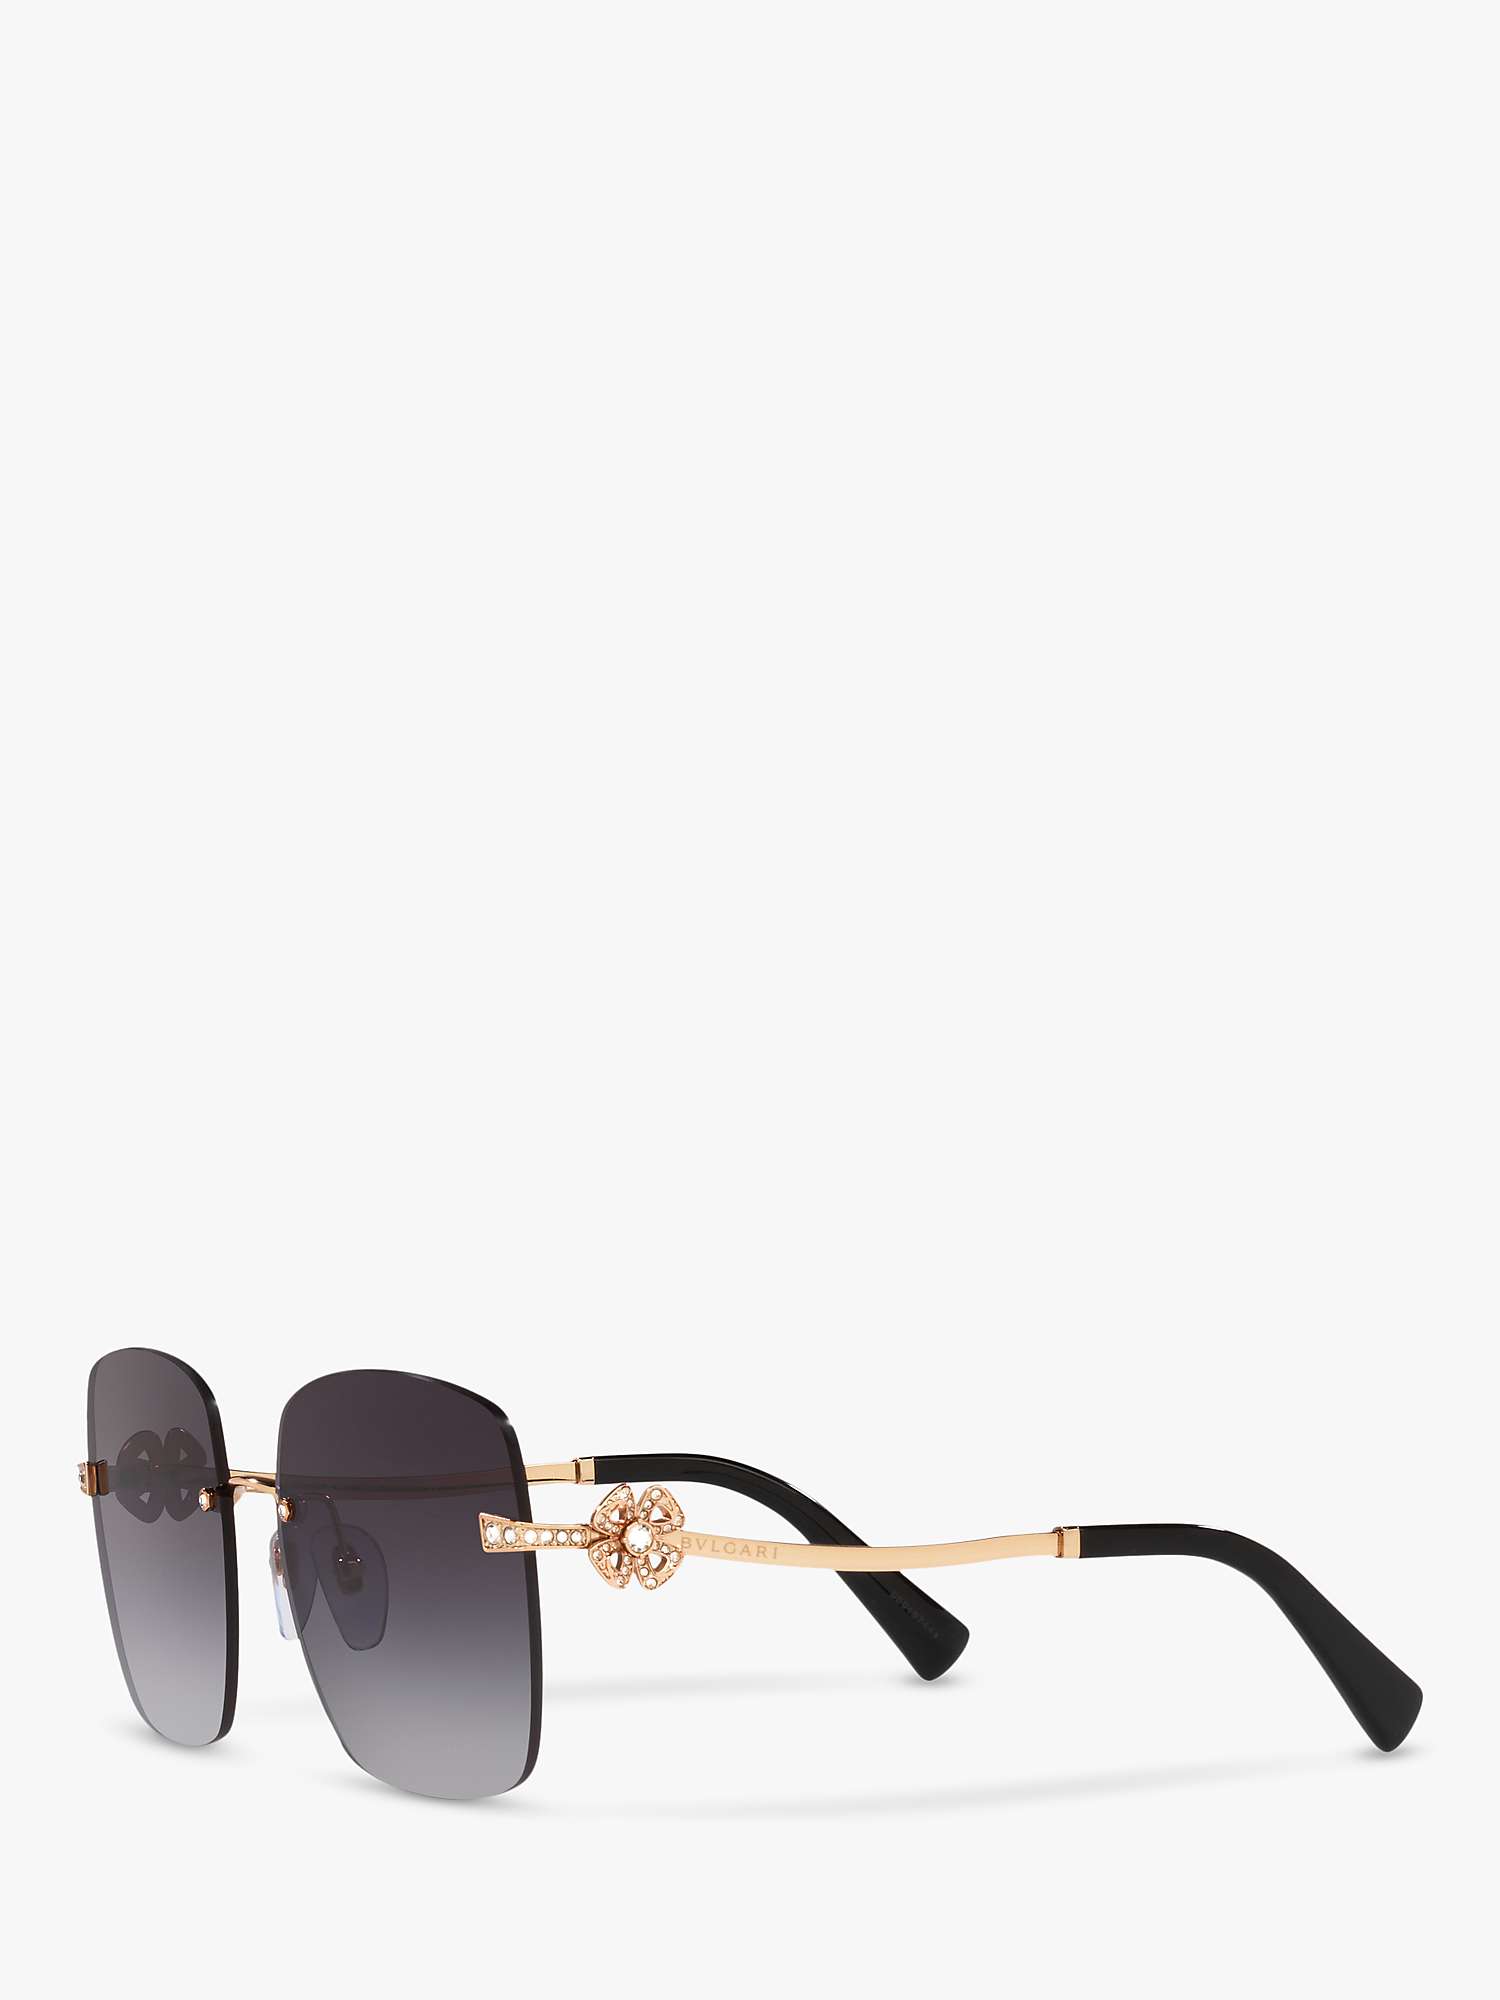 Buy BVLGARI BV6173B Women's Square Sunglasses, Rose Gold/Grey Gradient Online at johnlewis.com